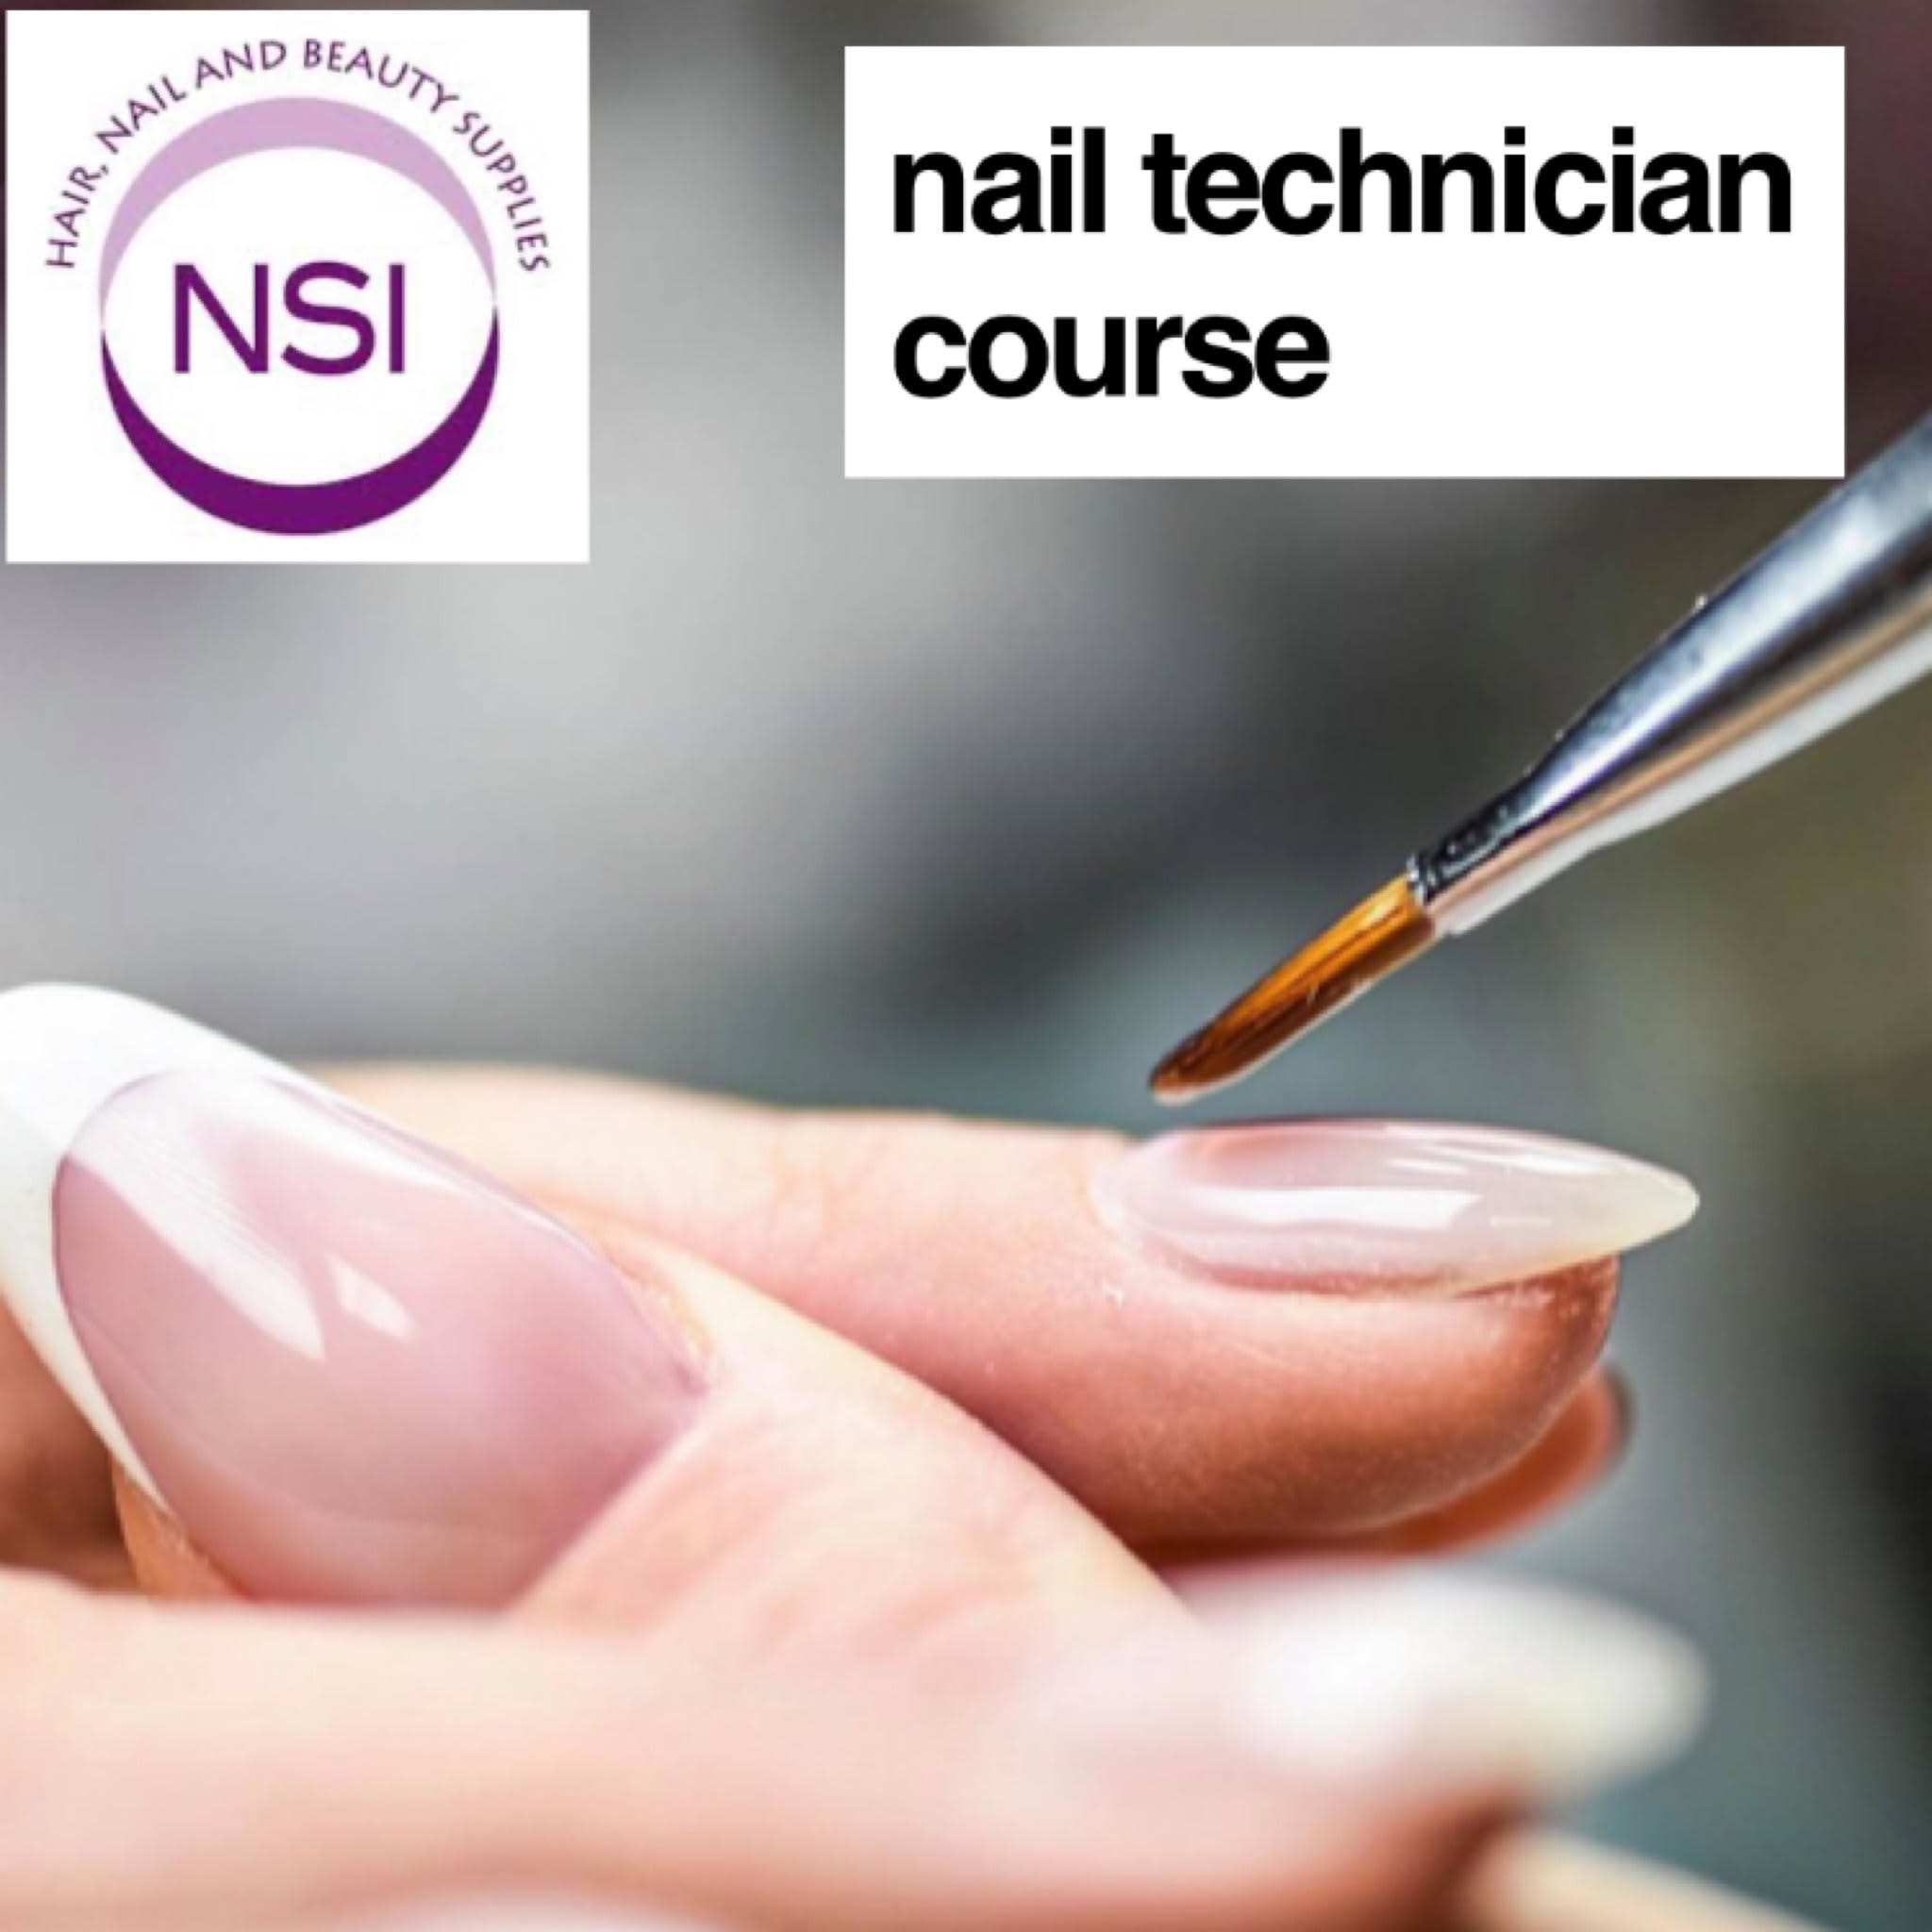 Nail Art Course | Nail Art Certifcate Course | International Makeup Academy  in Delhi, Near Me.| London Beauty Academy